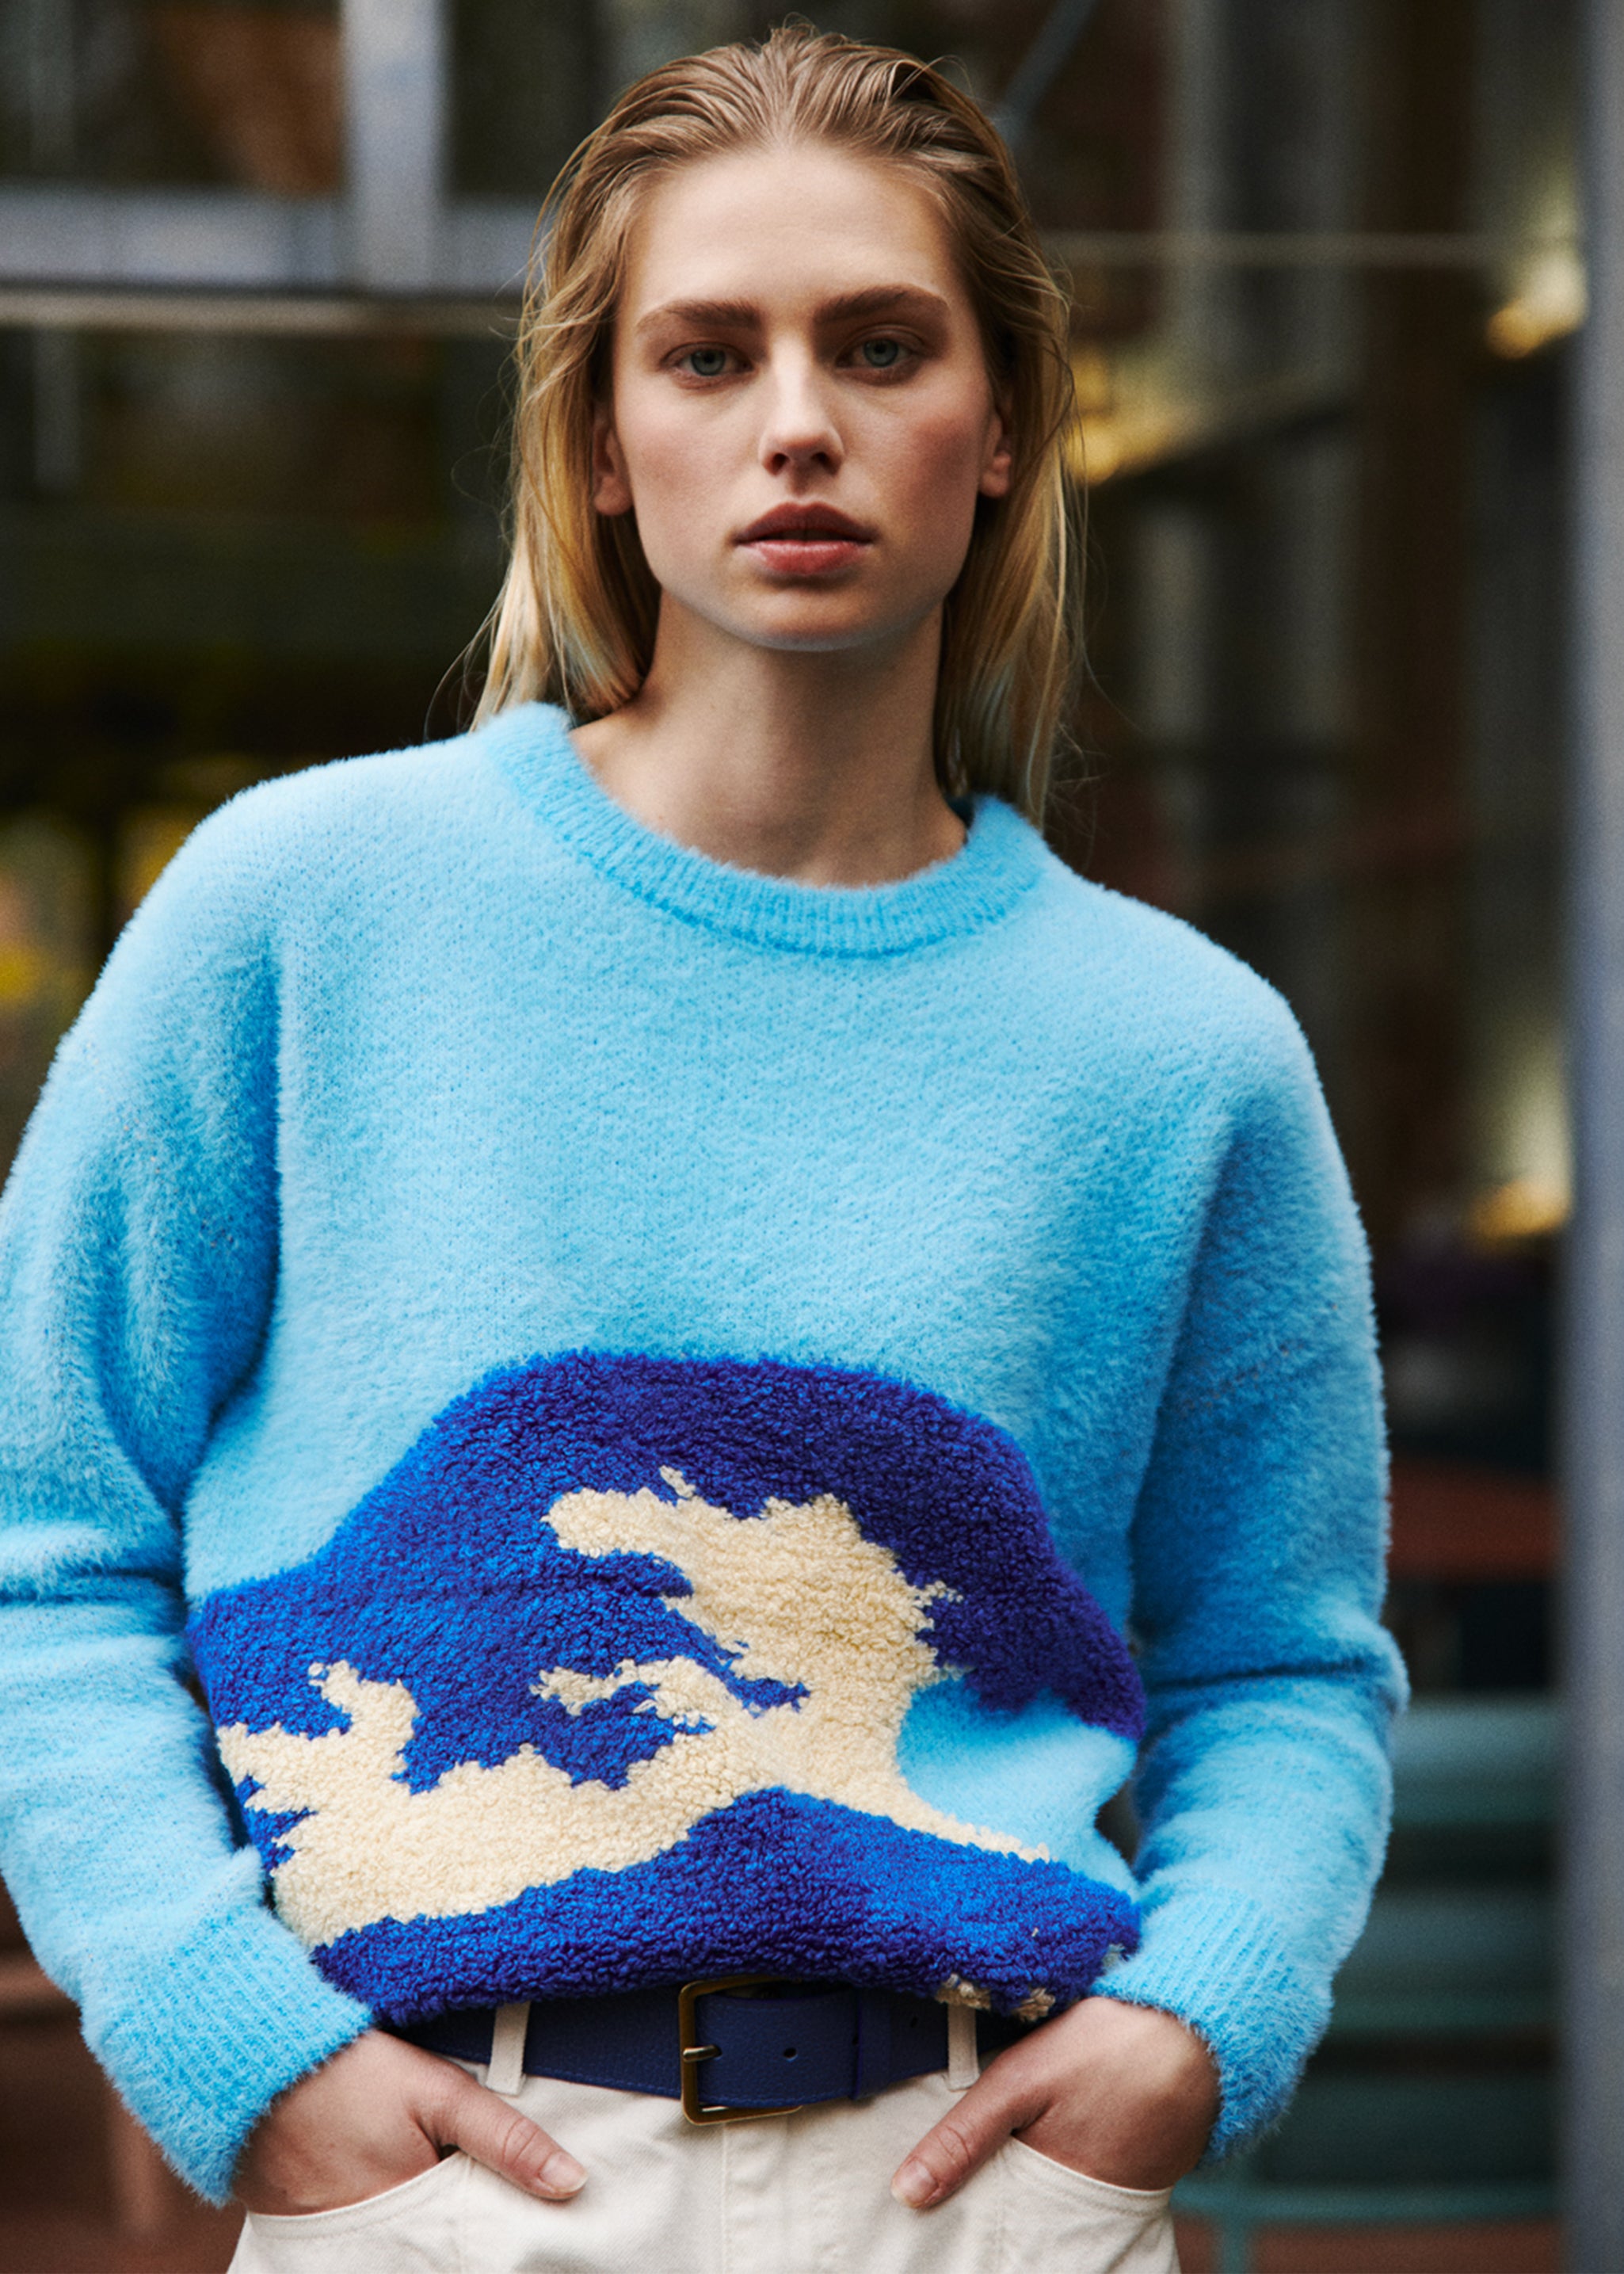 Louis Vuitton Blue Intarsia Logo Sweater